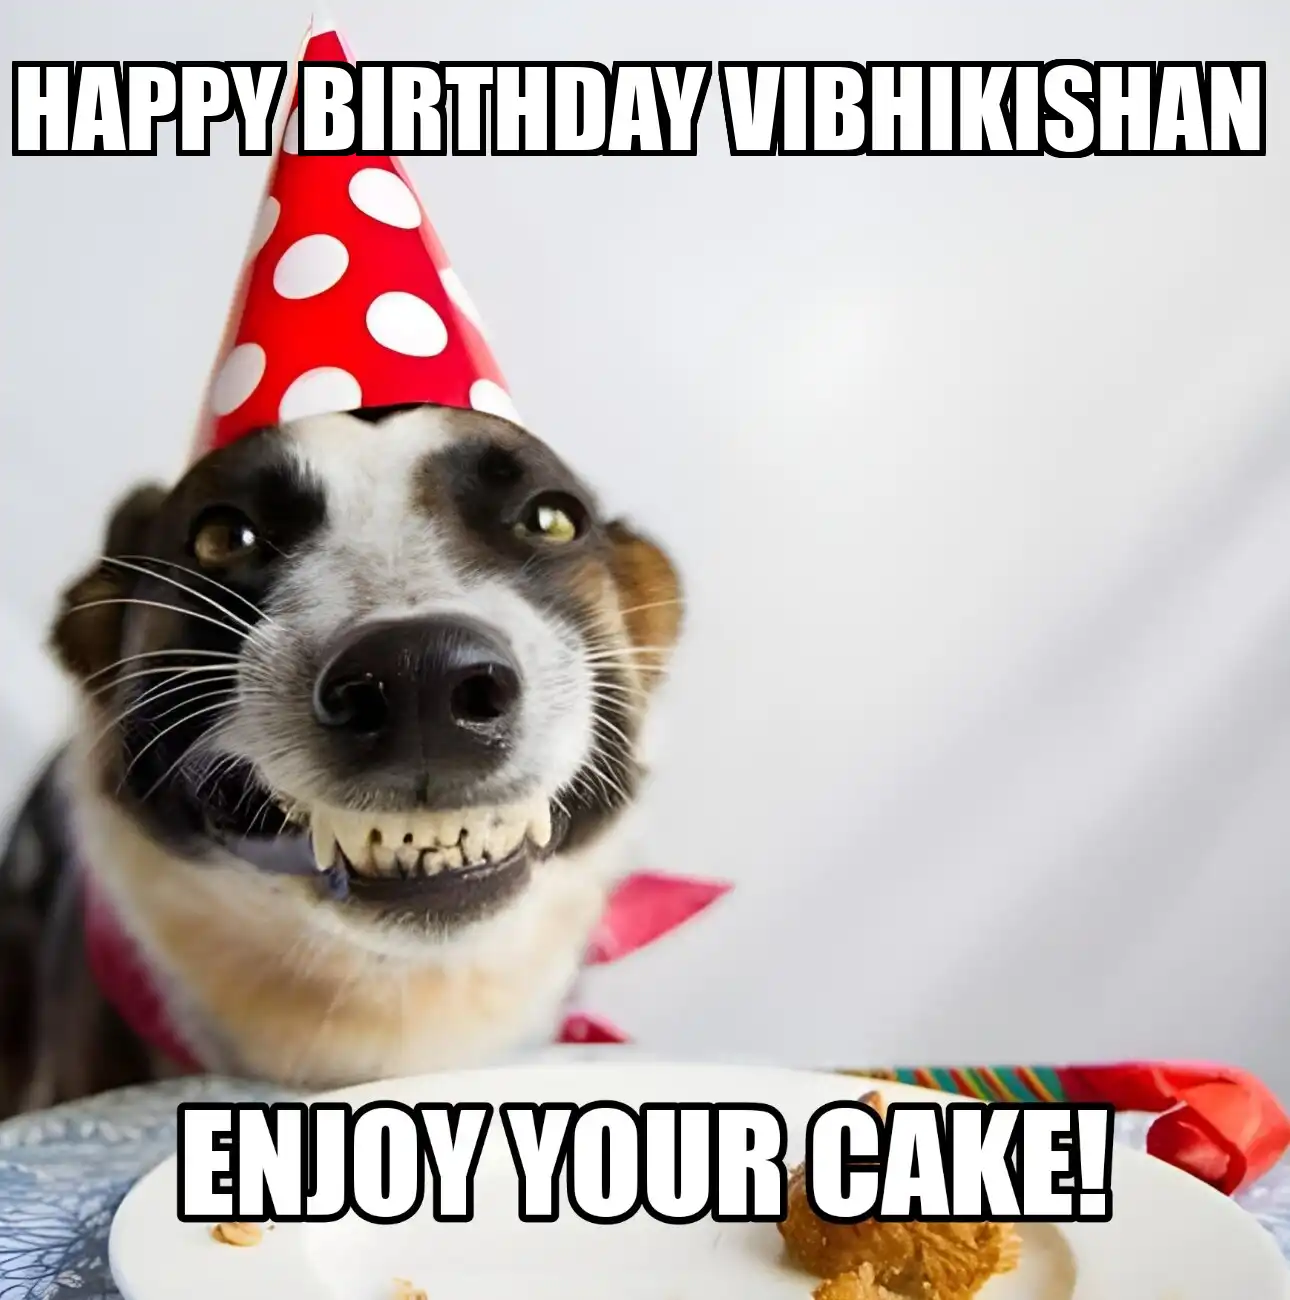 Happy Birthday Vibhikishan Enjoy Your Cake Dog Meme